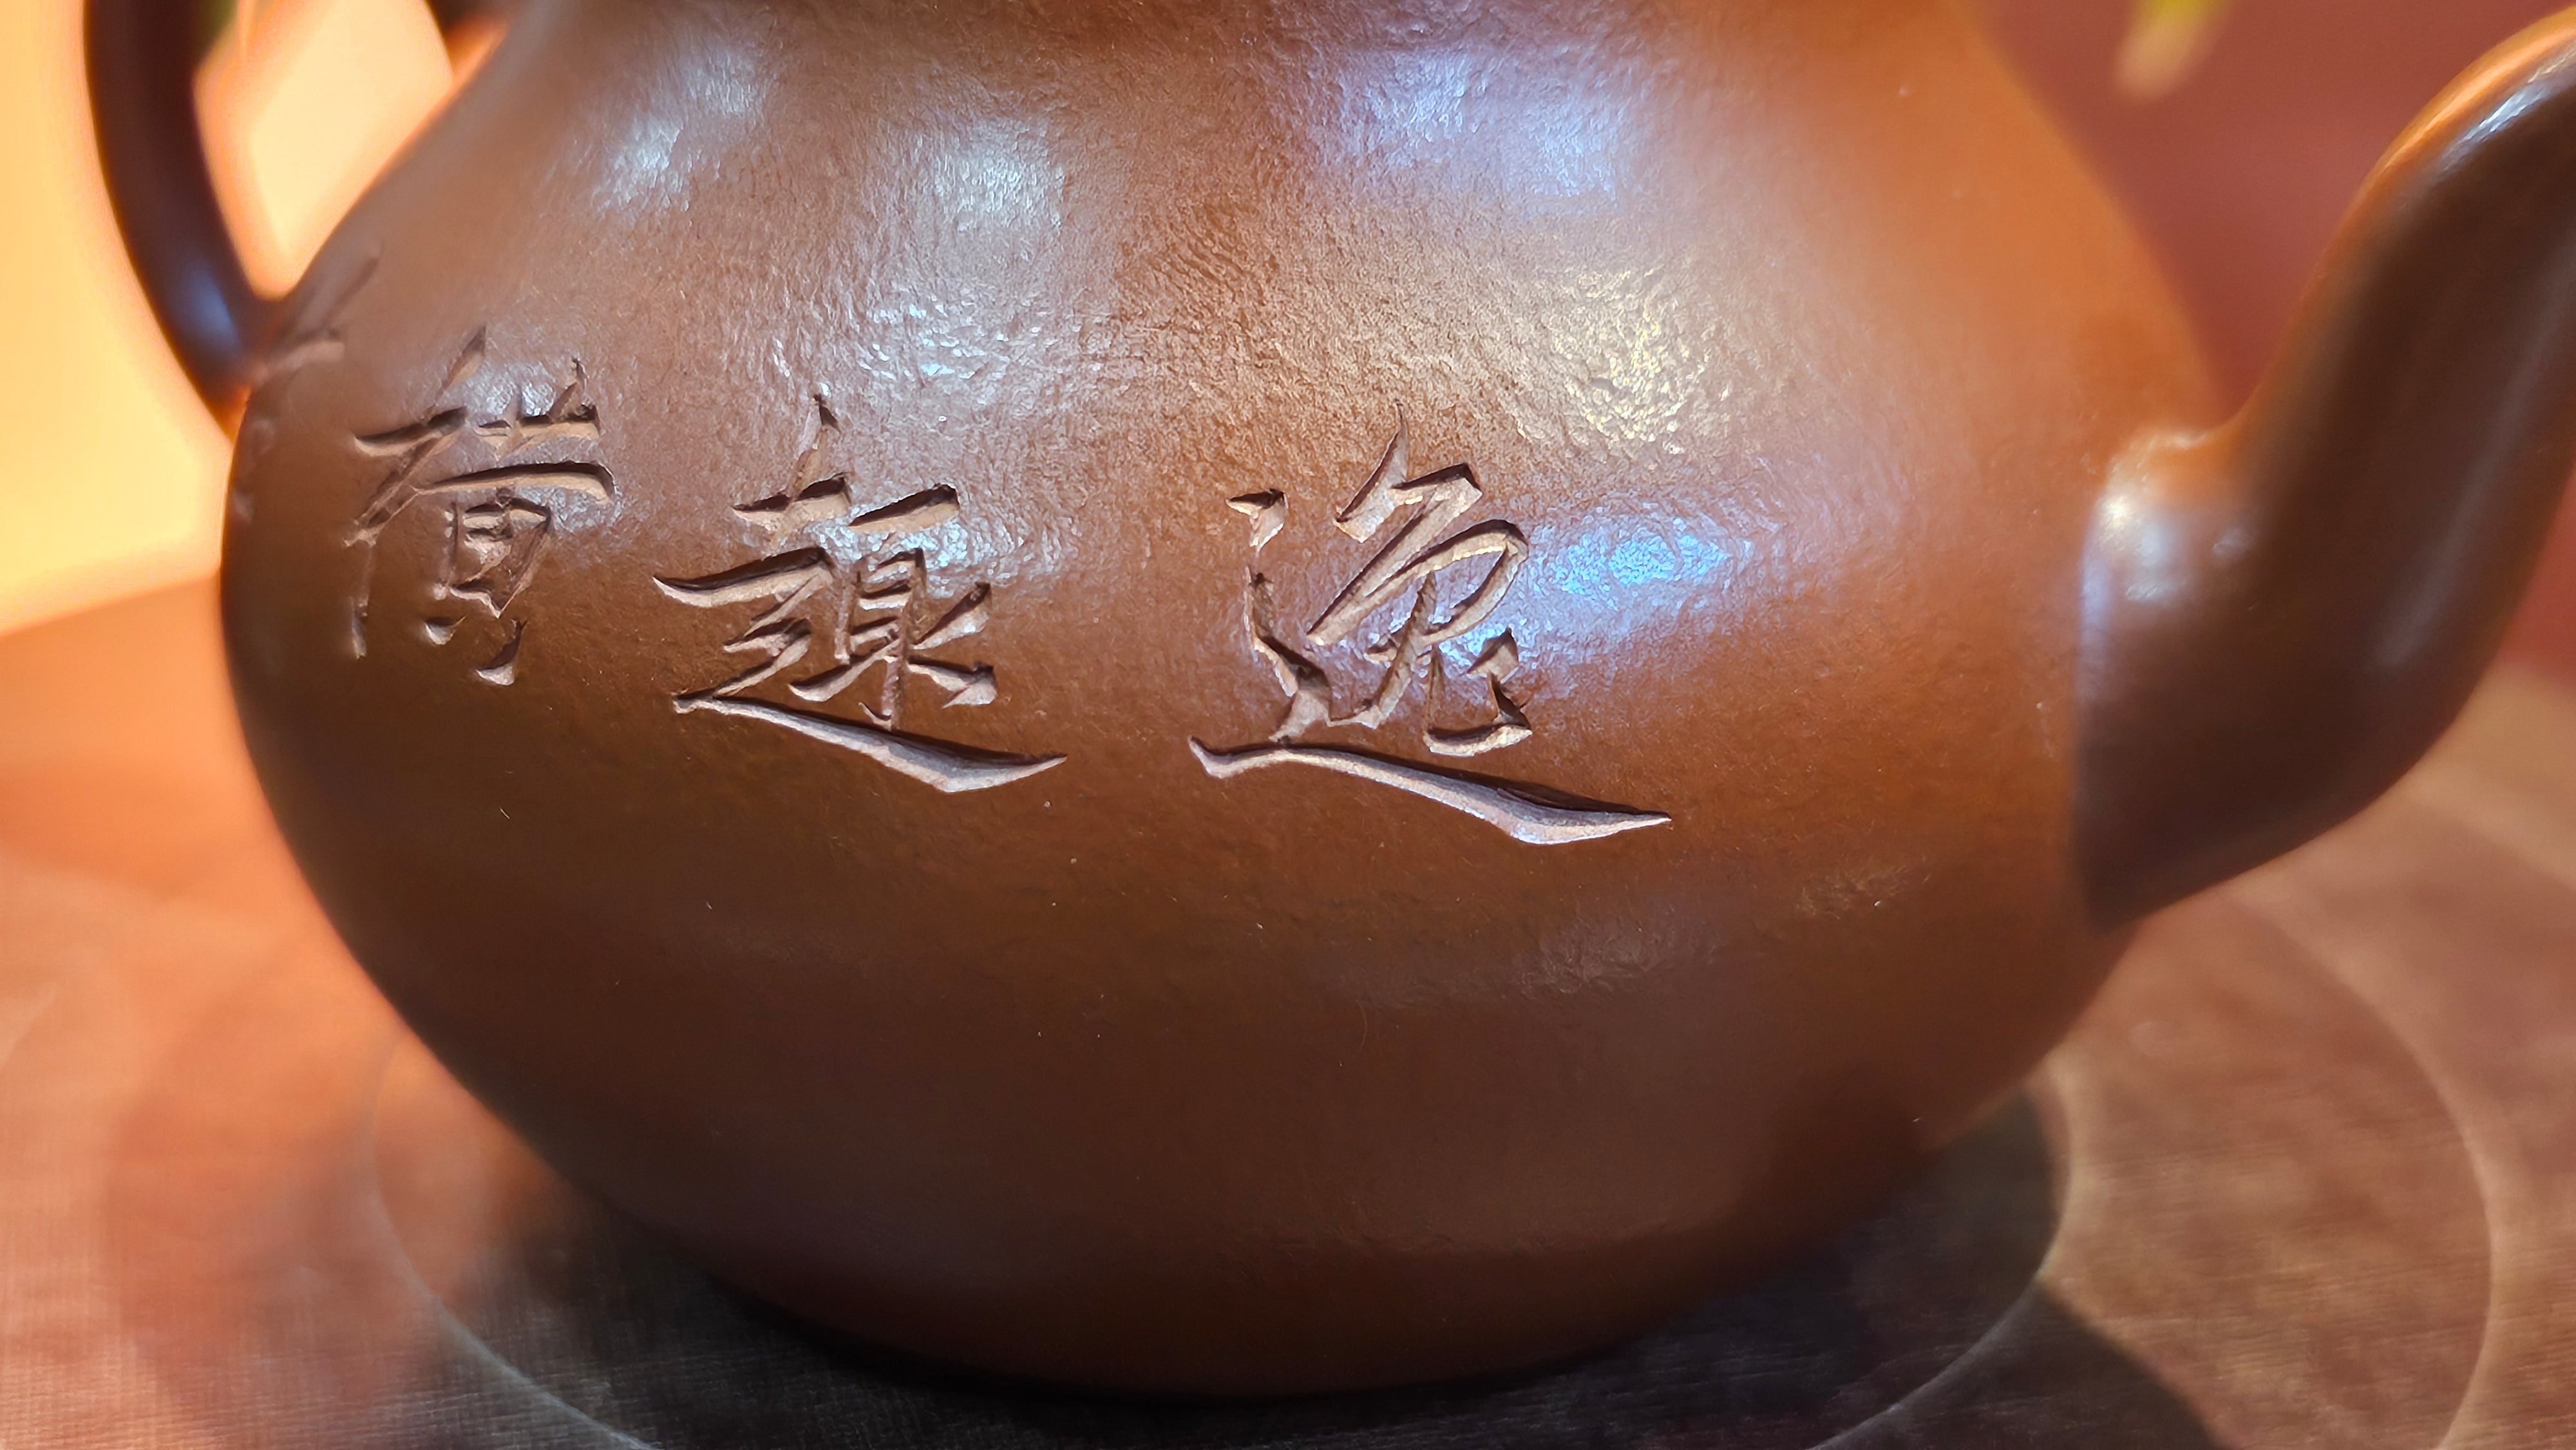 Li Xing 梨形, 172.5ml, Xiao Mei Yao Zhu Ni 小煤窑朱泥, by Craftsman Wang Xing 王兴, Engraving by Craftsman Ding Tie Ping 丁铁平 (Artistic Byname 一德).